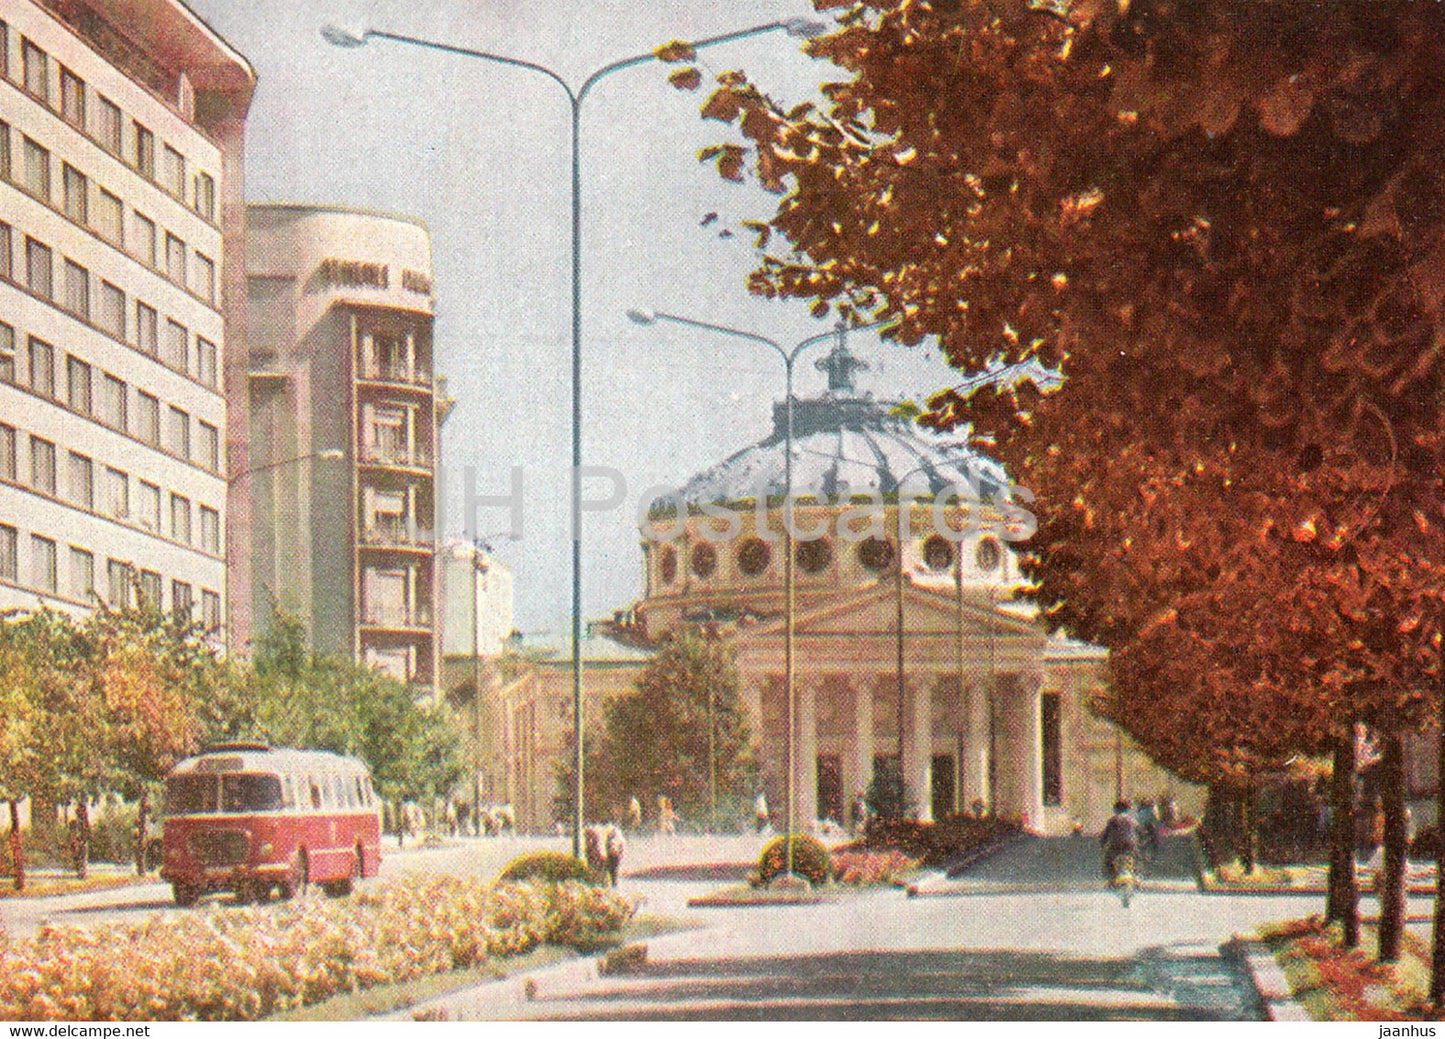 Bucharest - Athenaeum - bus - 1965 - Romania - unused - JH Postcards